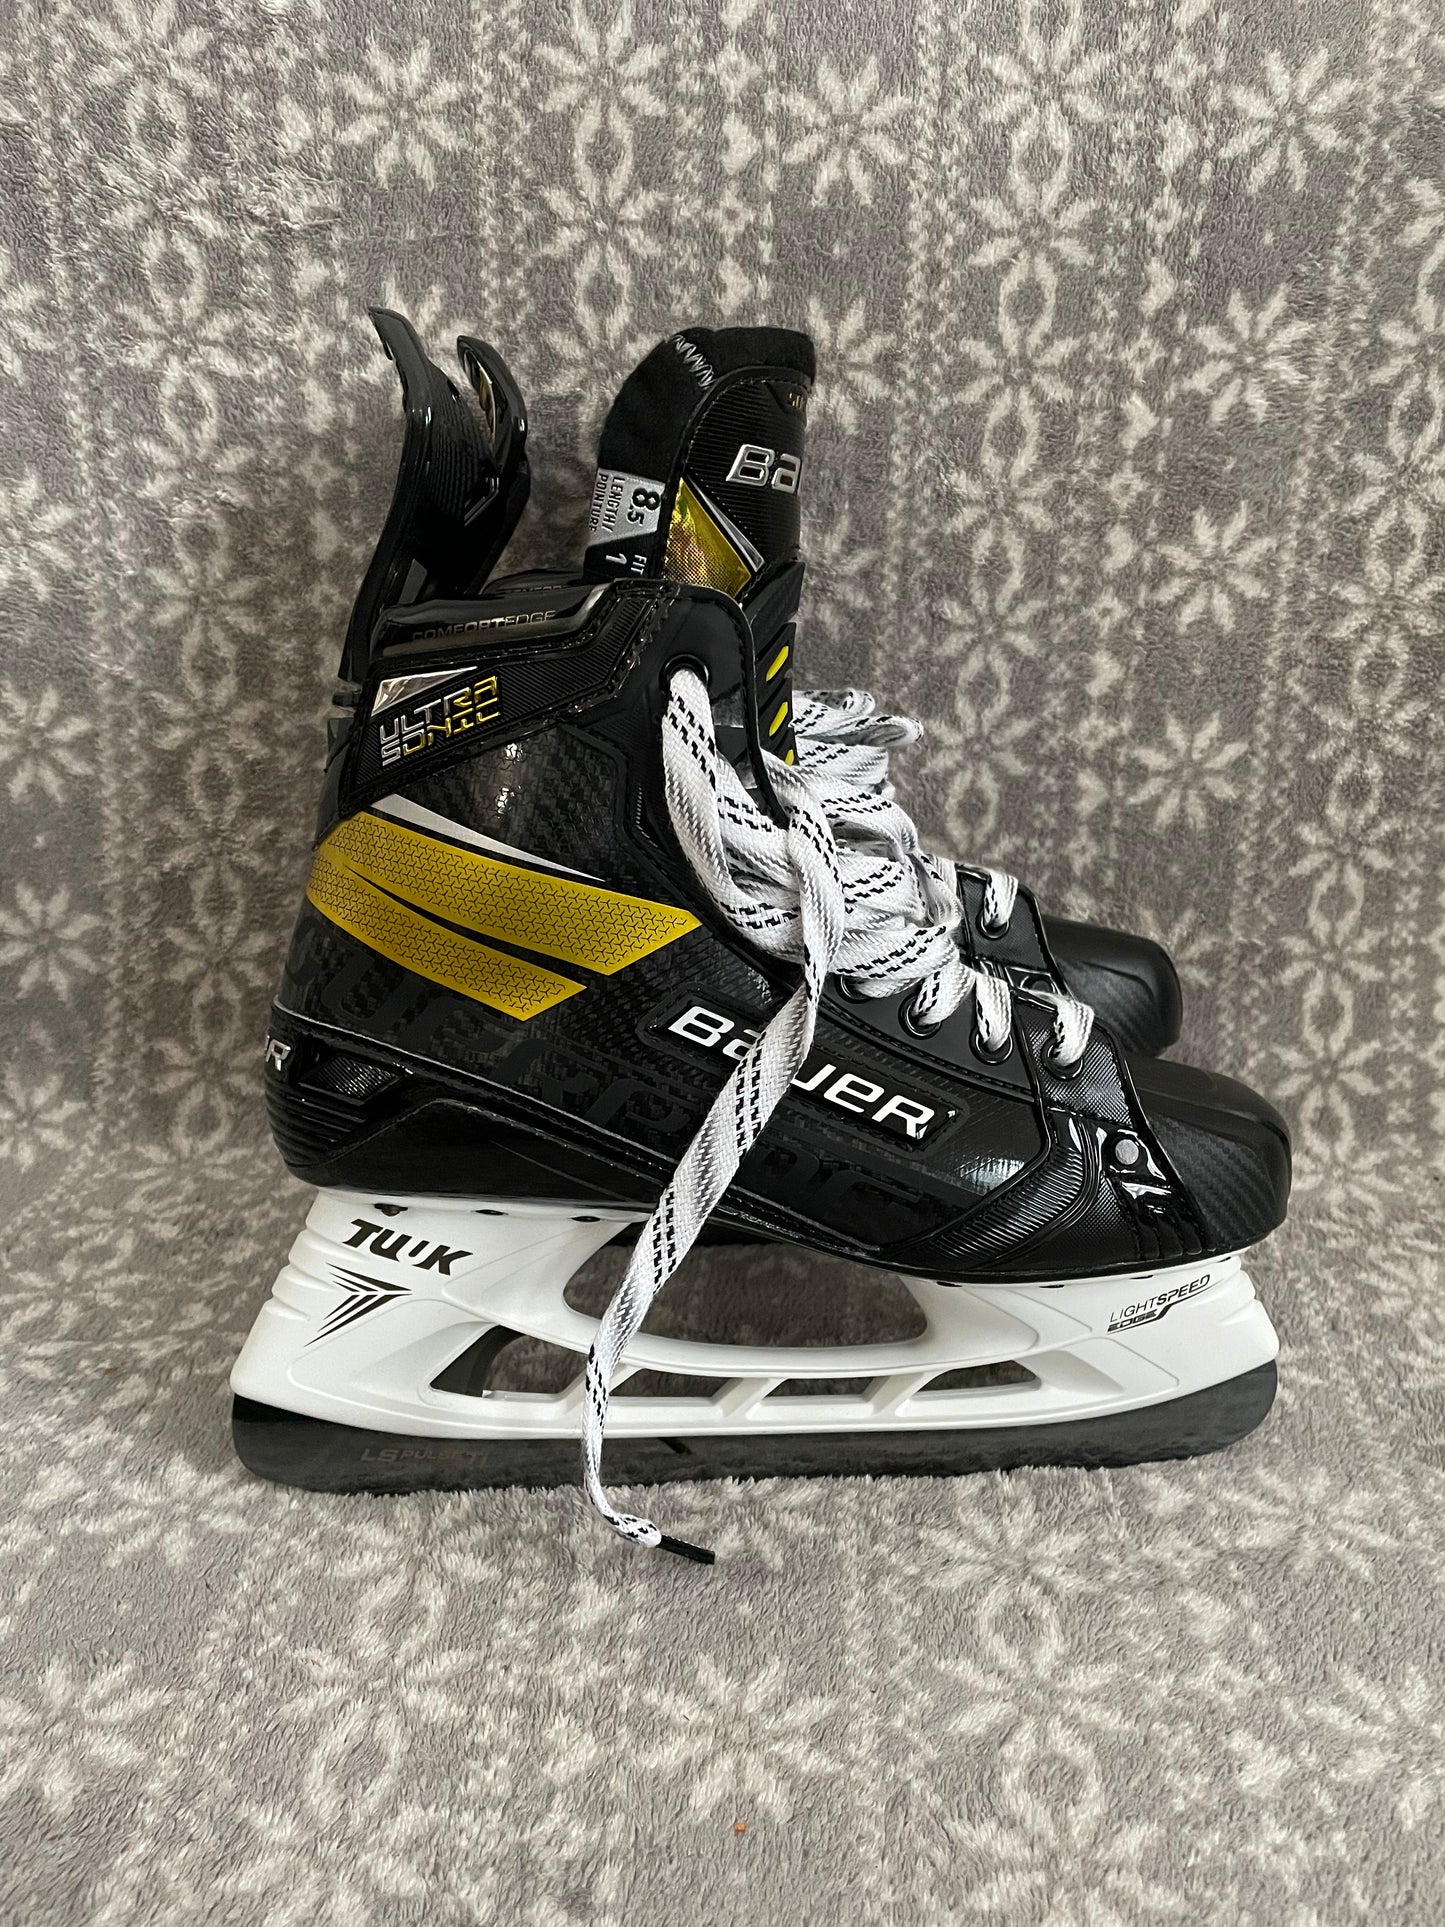 Like New (Fit Stock) Bauer Supreme UltraSonic Hockey Skates *Multiple Sizes*